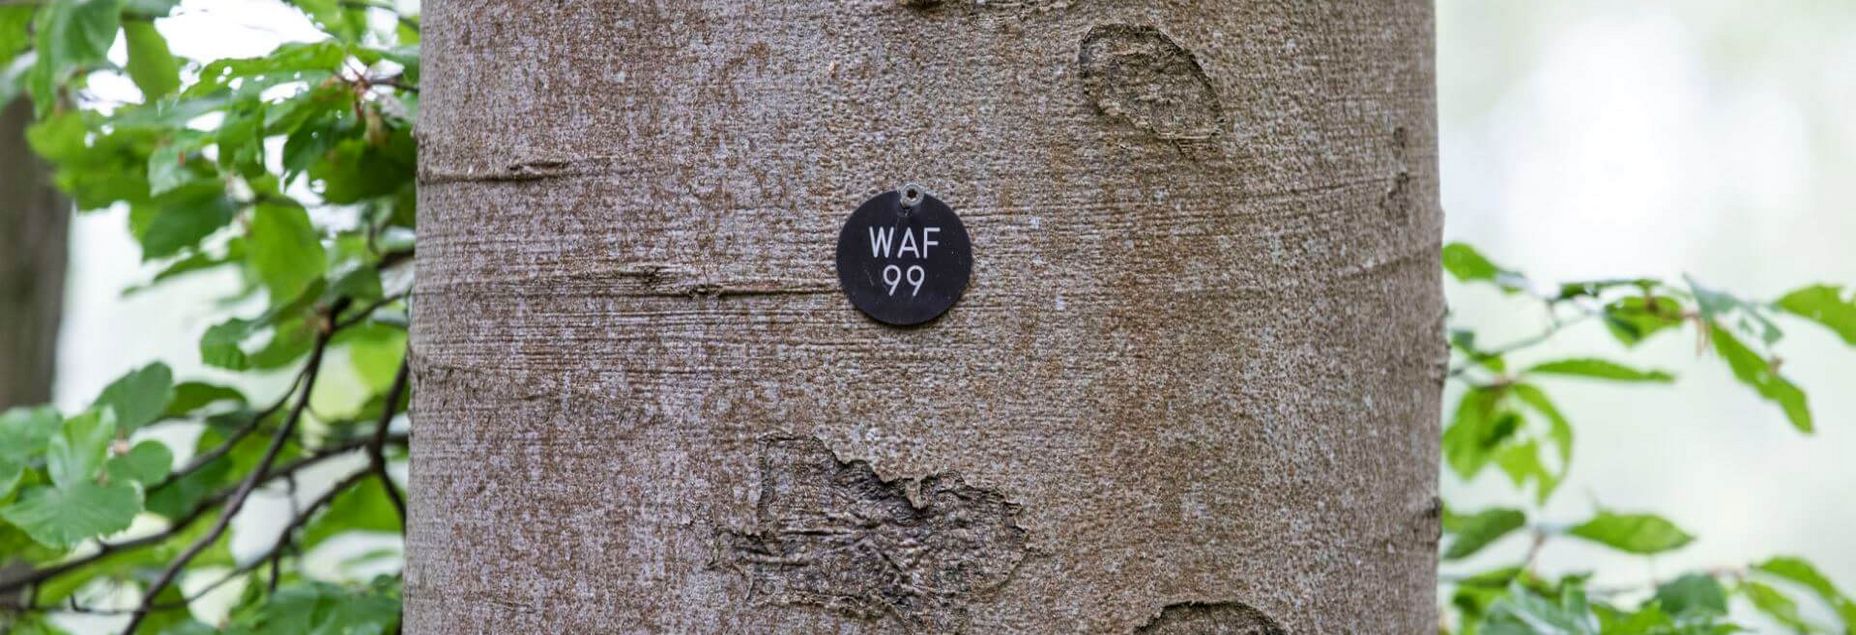 FriedWald-Onlineshop WAF 99